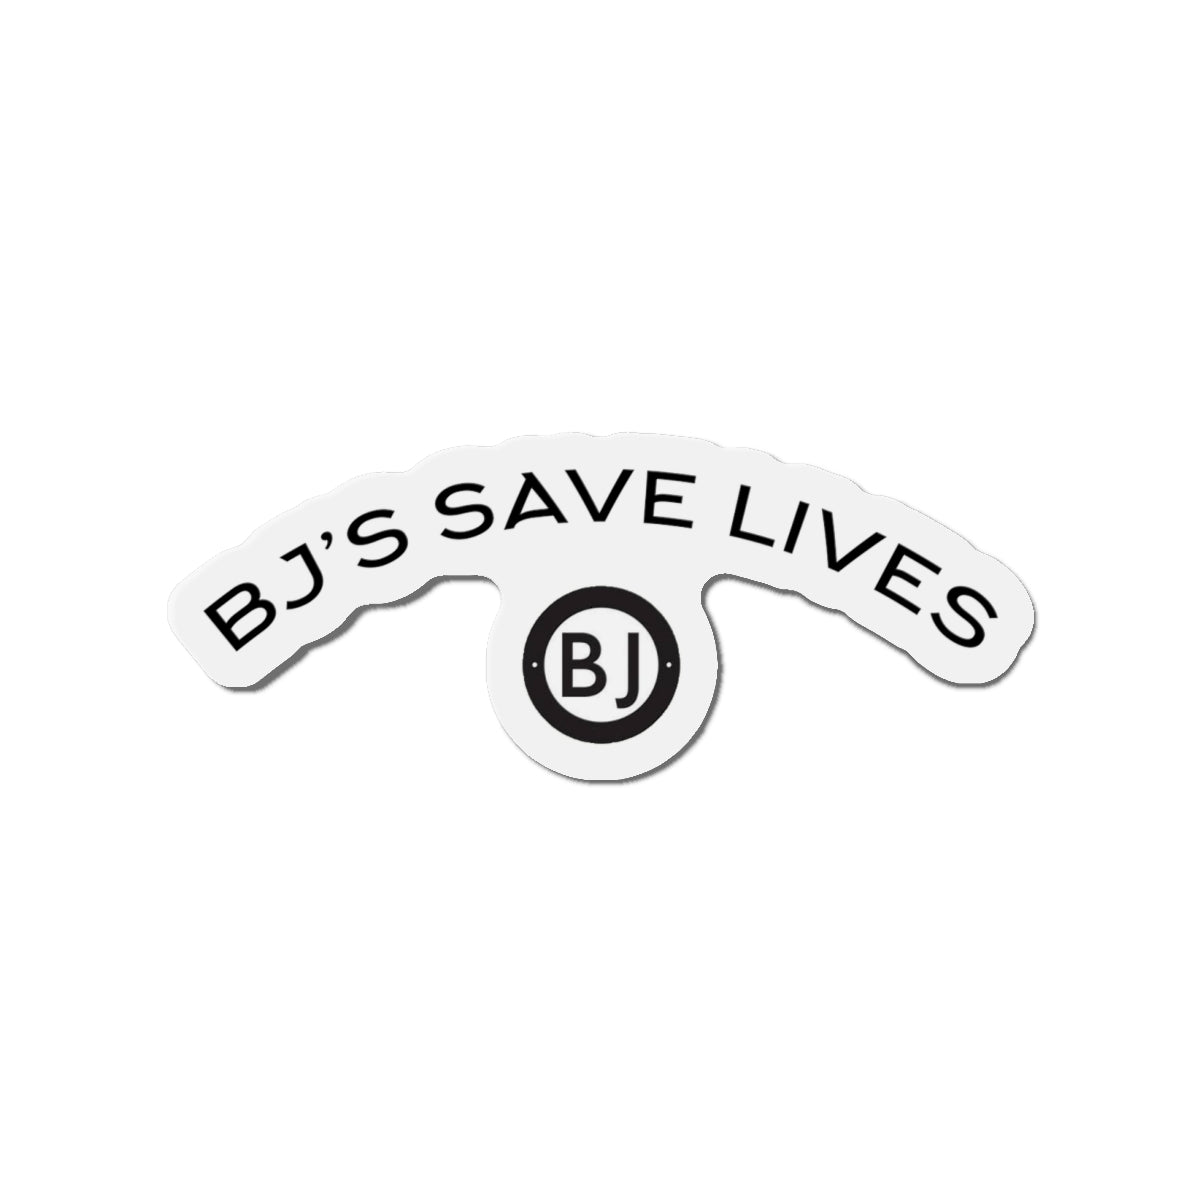 "BJ'S SAVE LIVES" Die-Cut Magnets